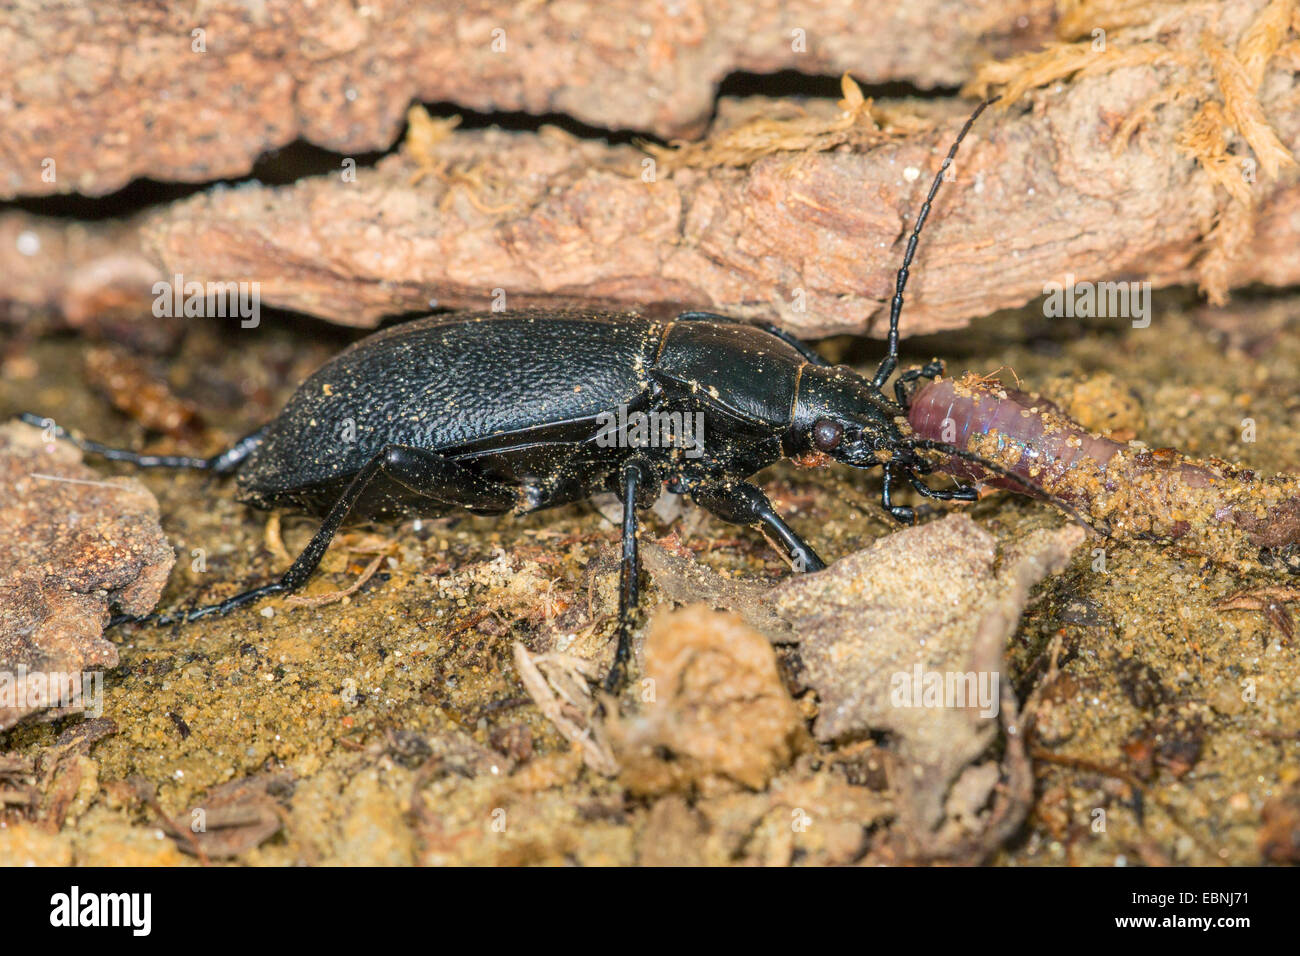 leatherback ground beetle (Carabus coriaceus), feeeding worm, Germany Stock Photo